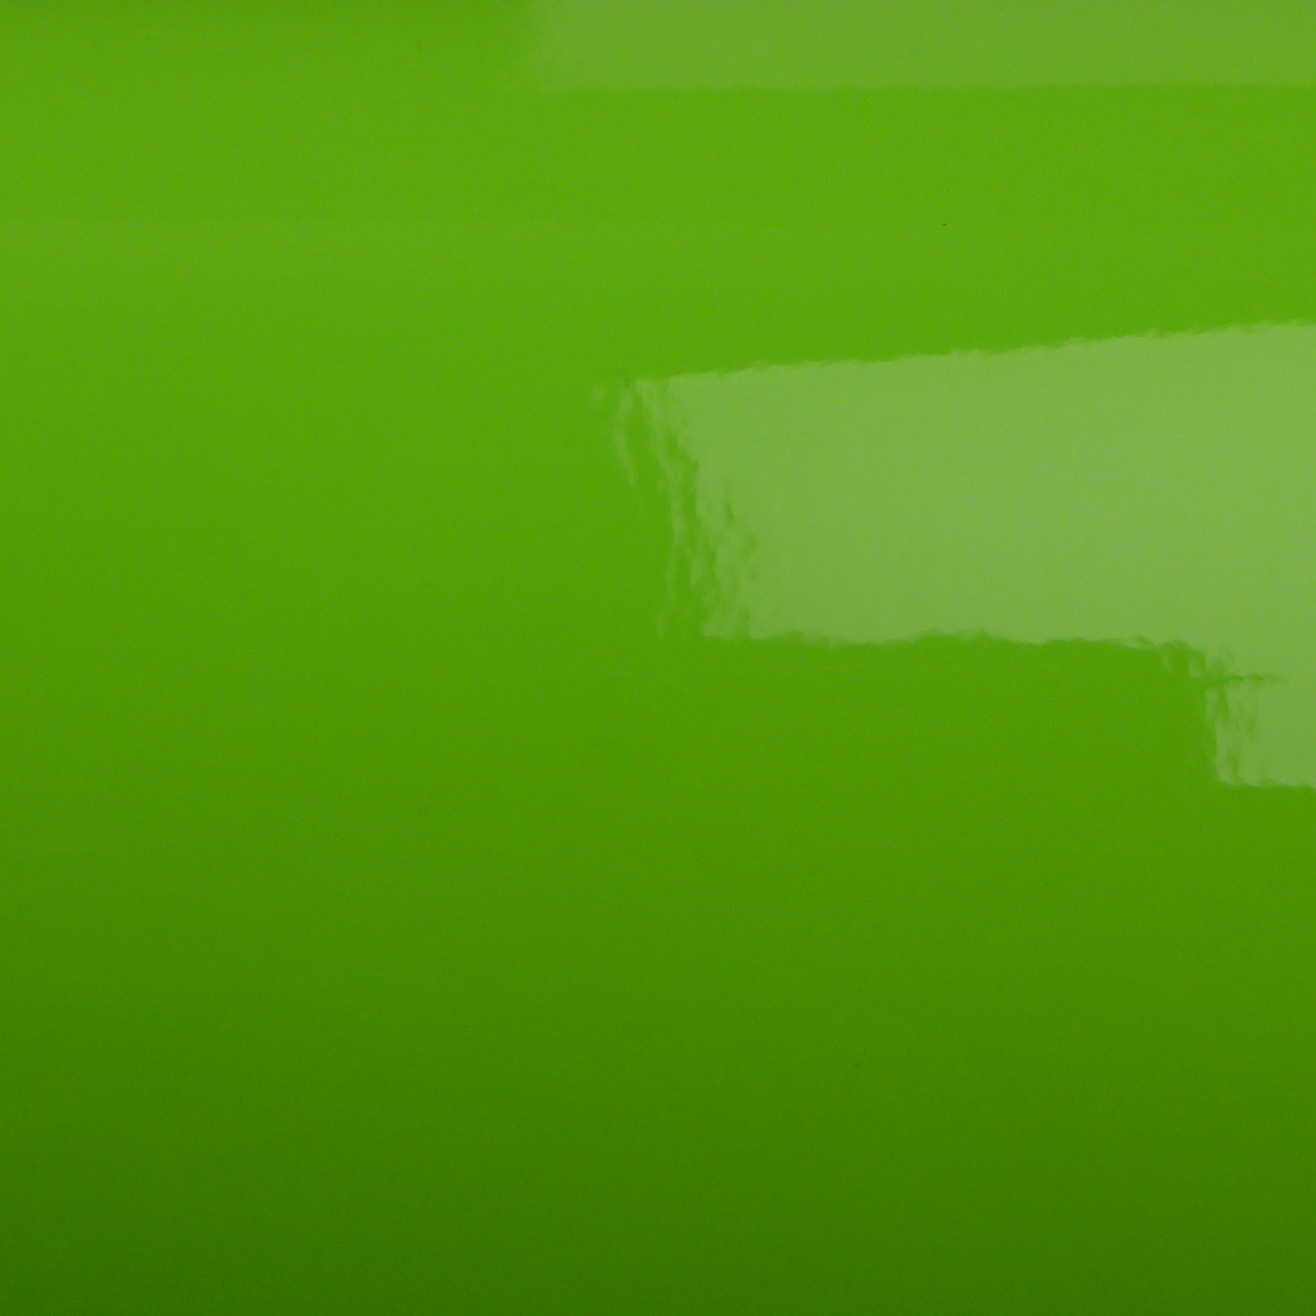 3M 2080 G16 light green gloss wrapping bilindpakning grøn blank folie carl jensen